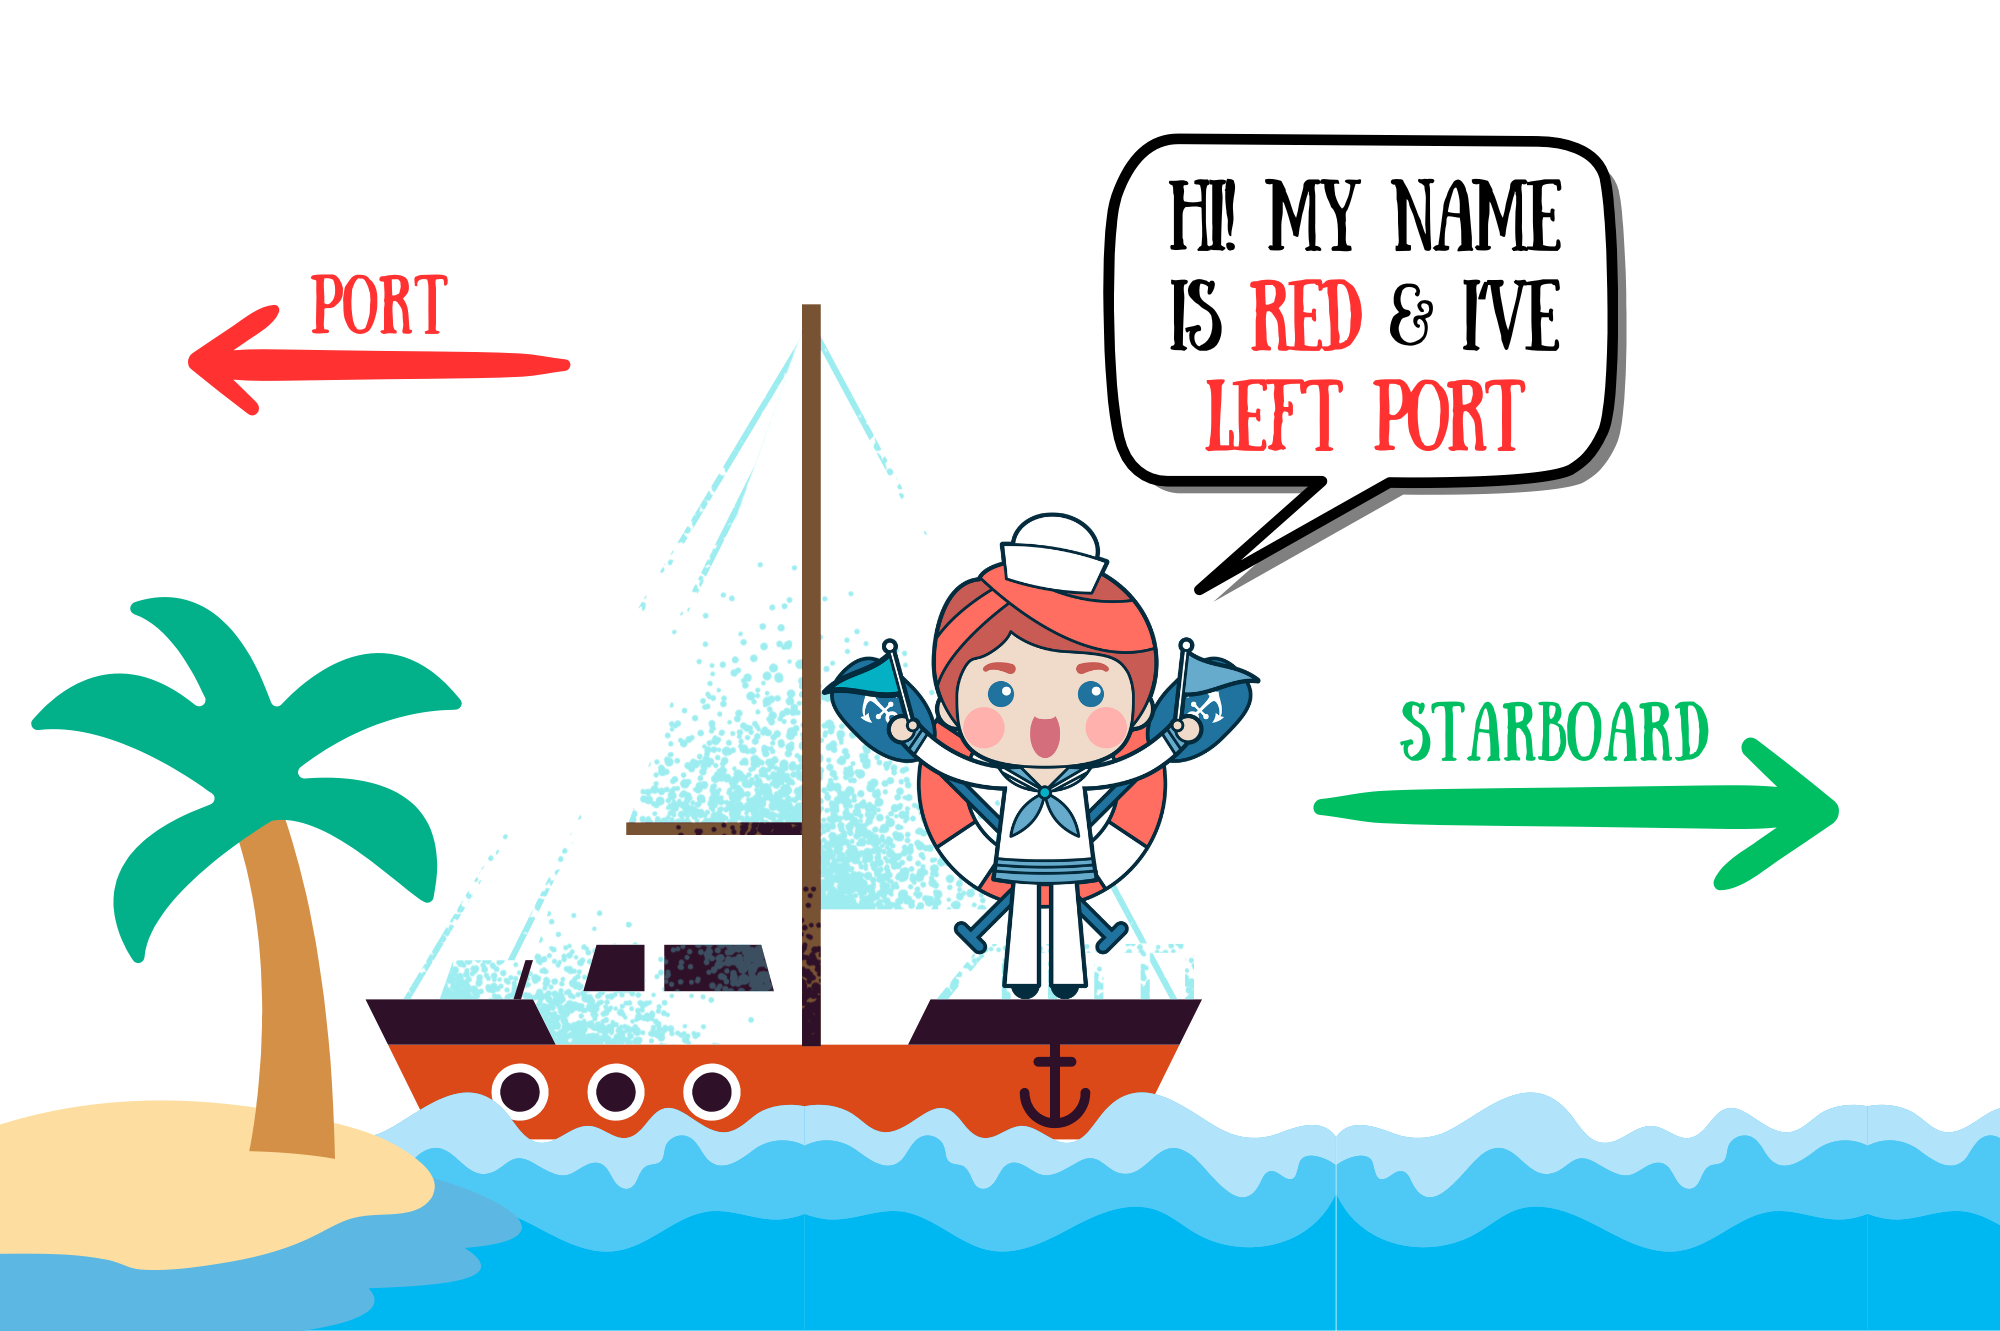 Port and starboard - a sailor named Red left port